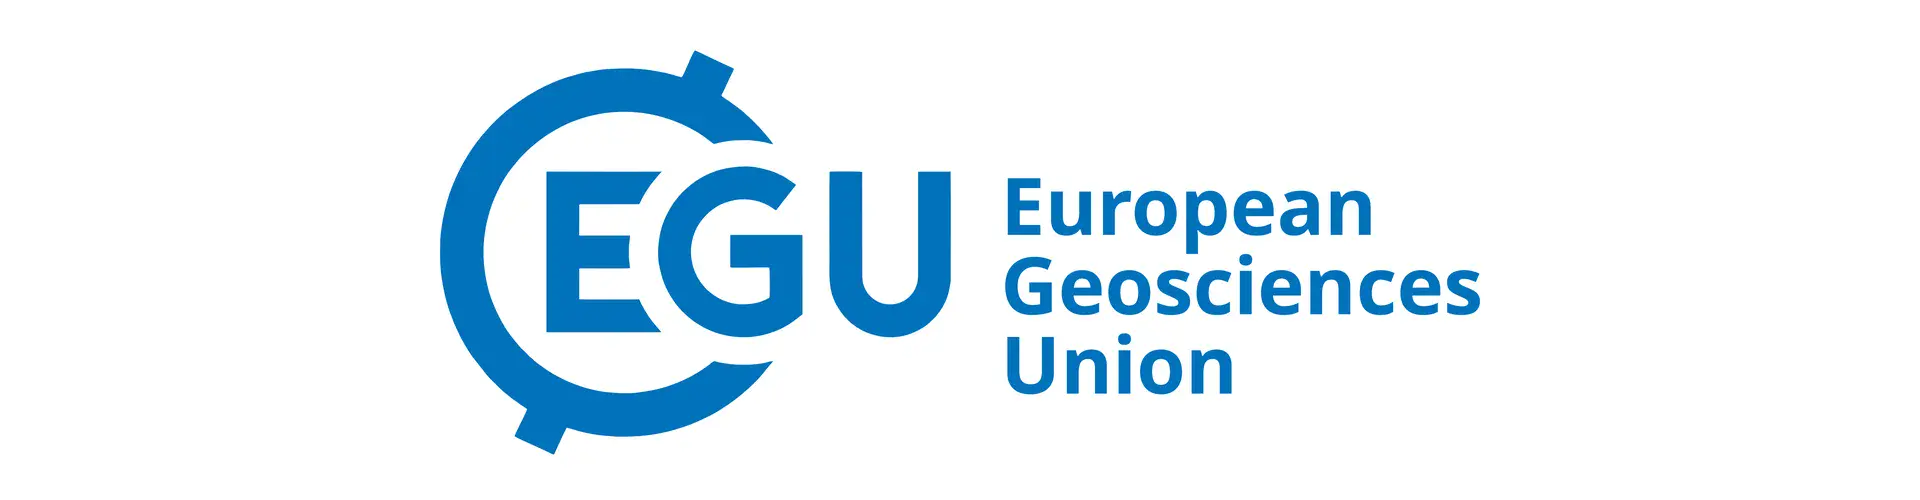 EGU logo blue and white 1000x340.png